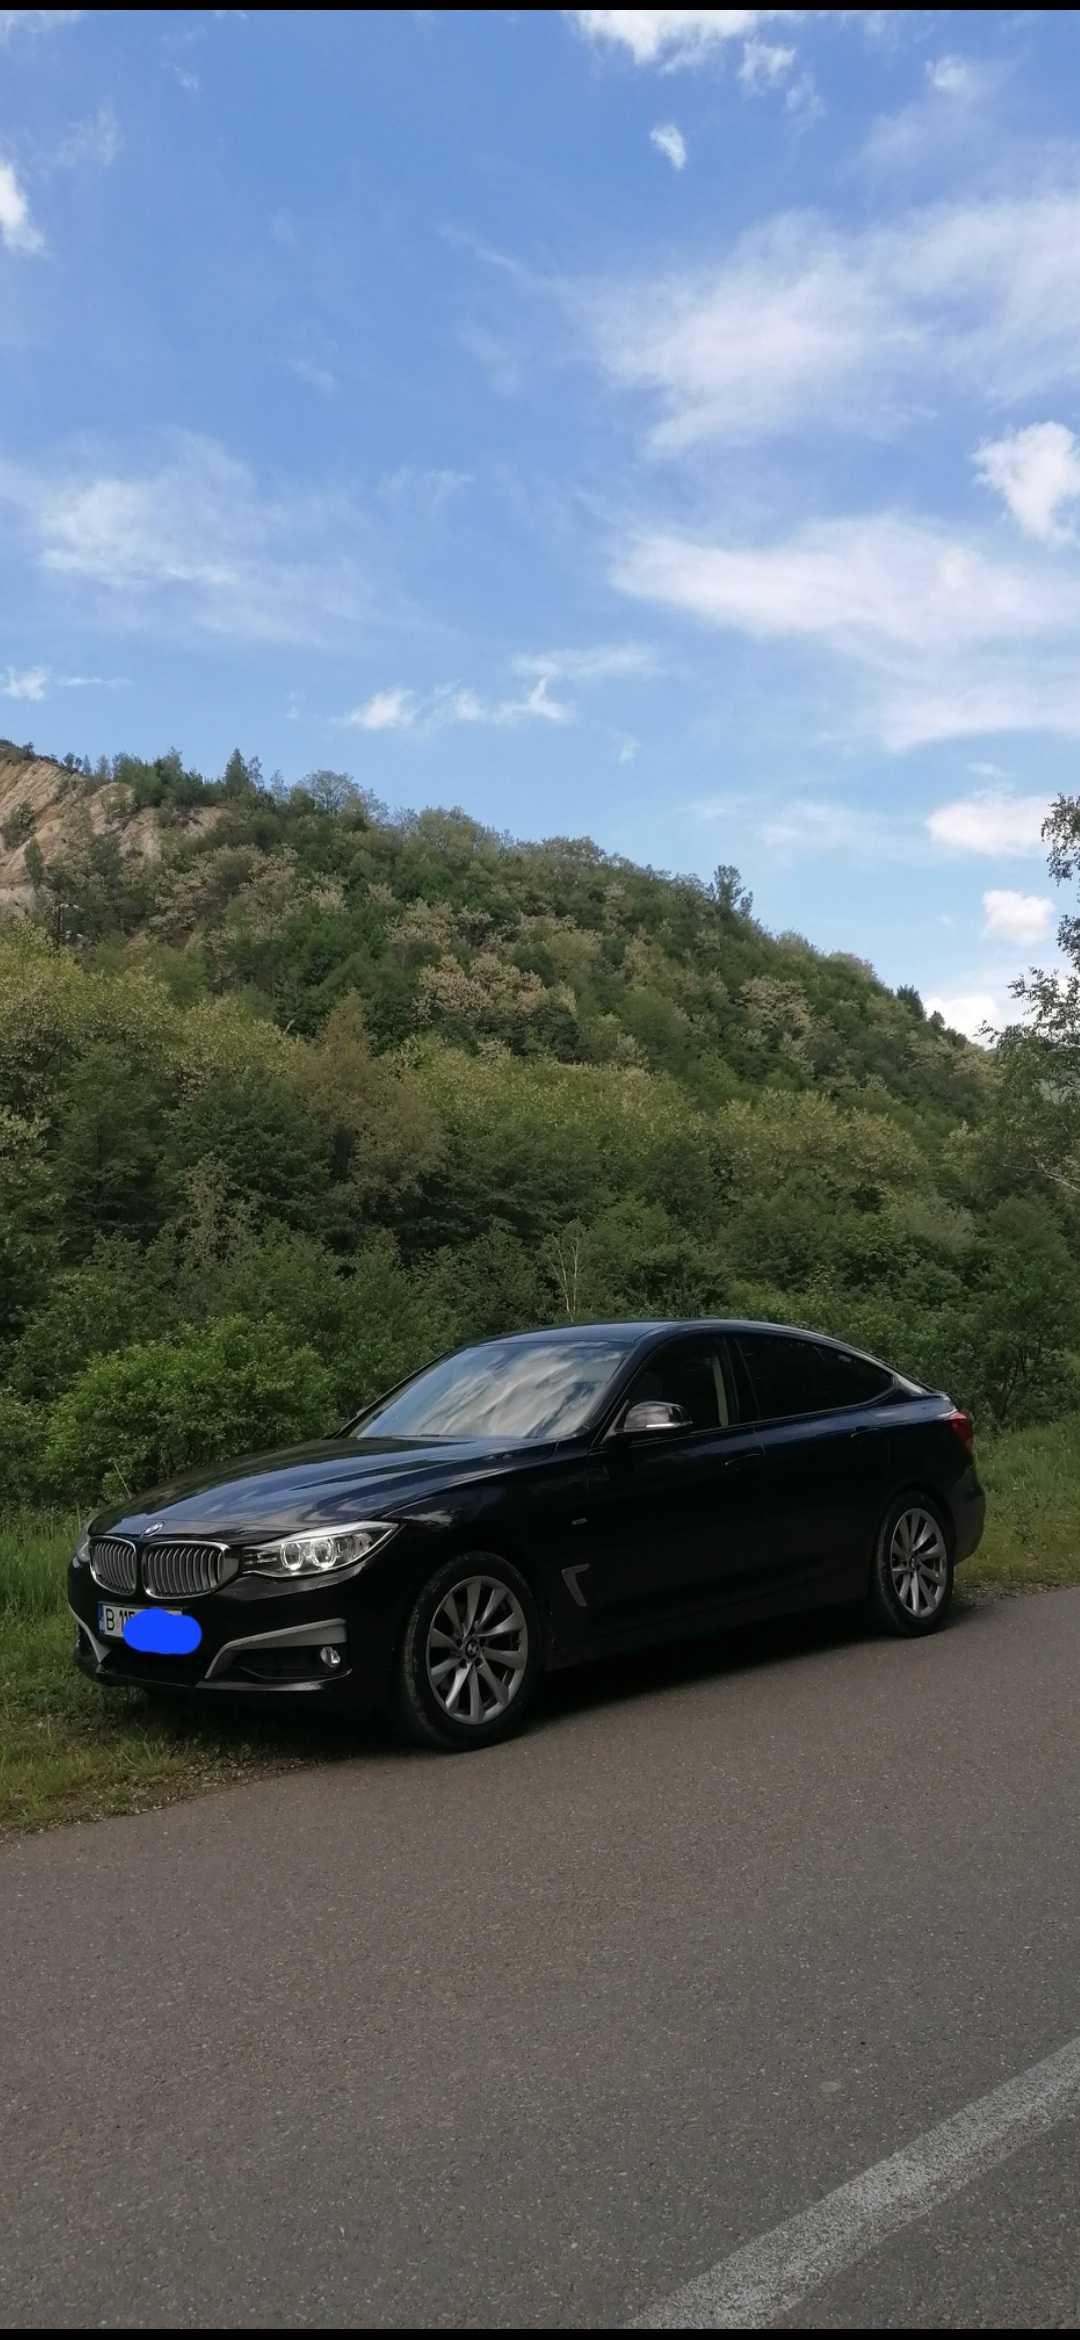 BMW seria 3 GT modern line 2015. Proprietar din 2019